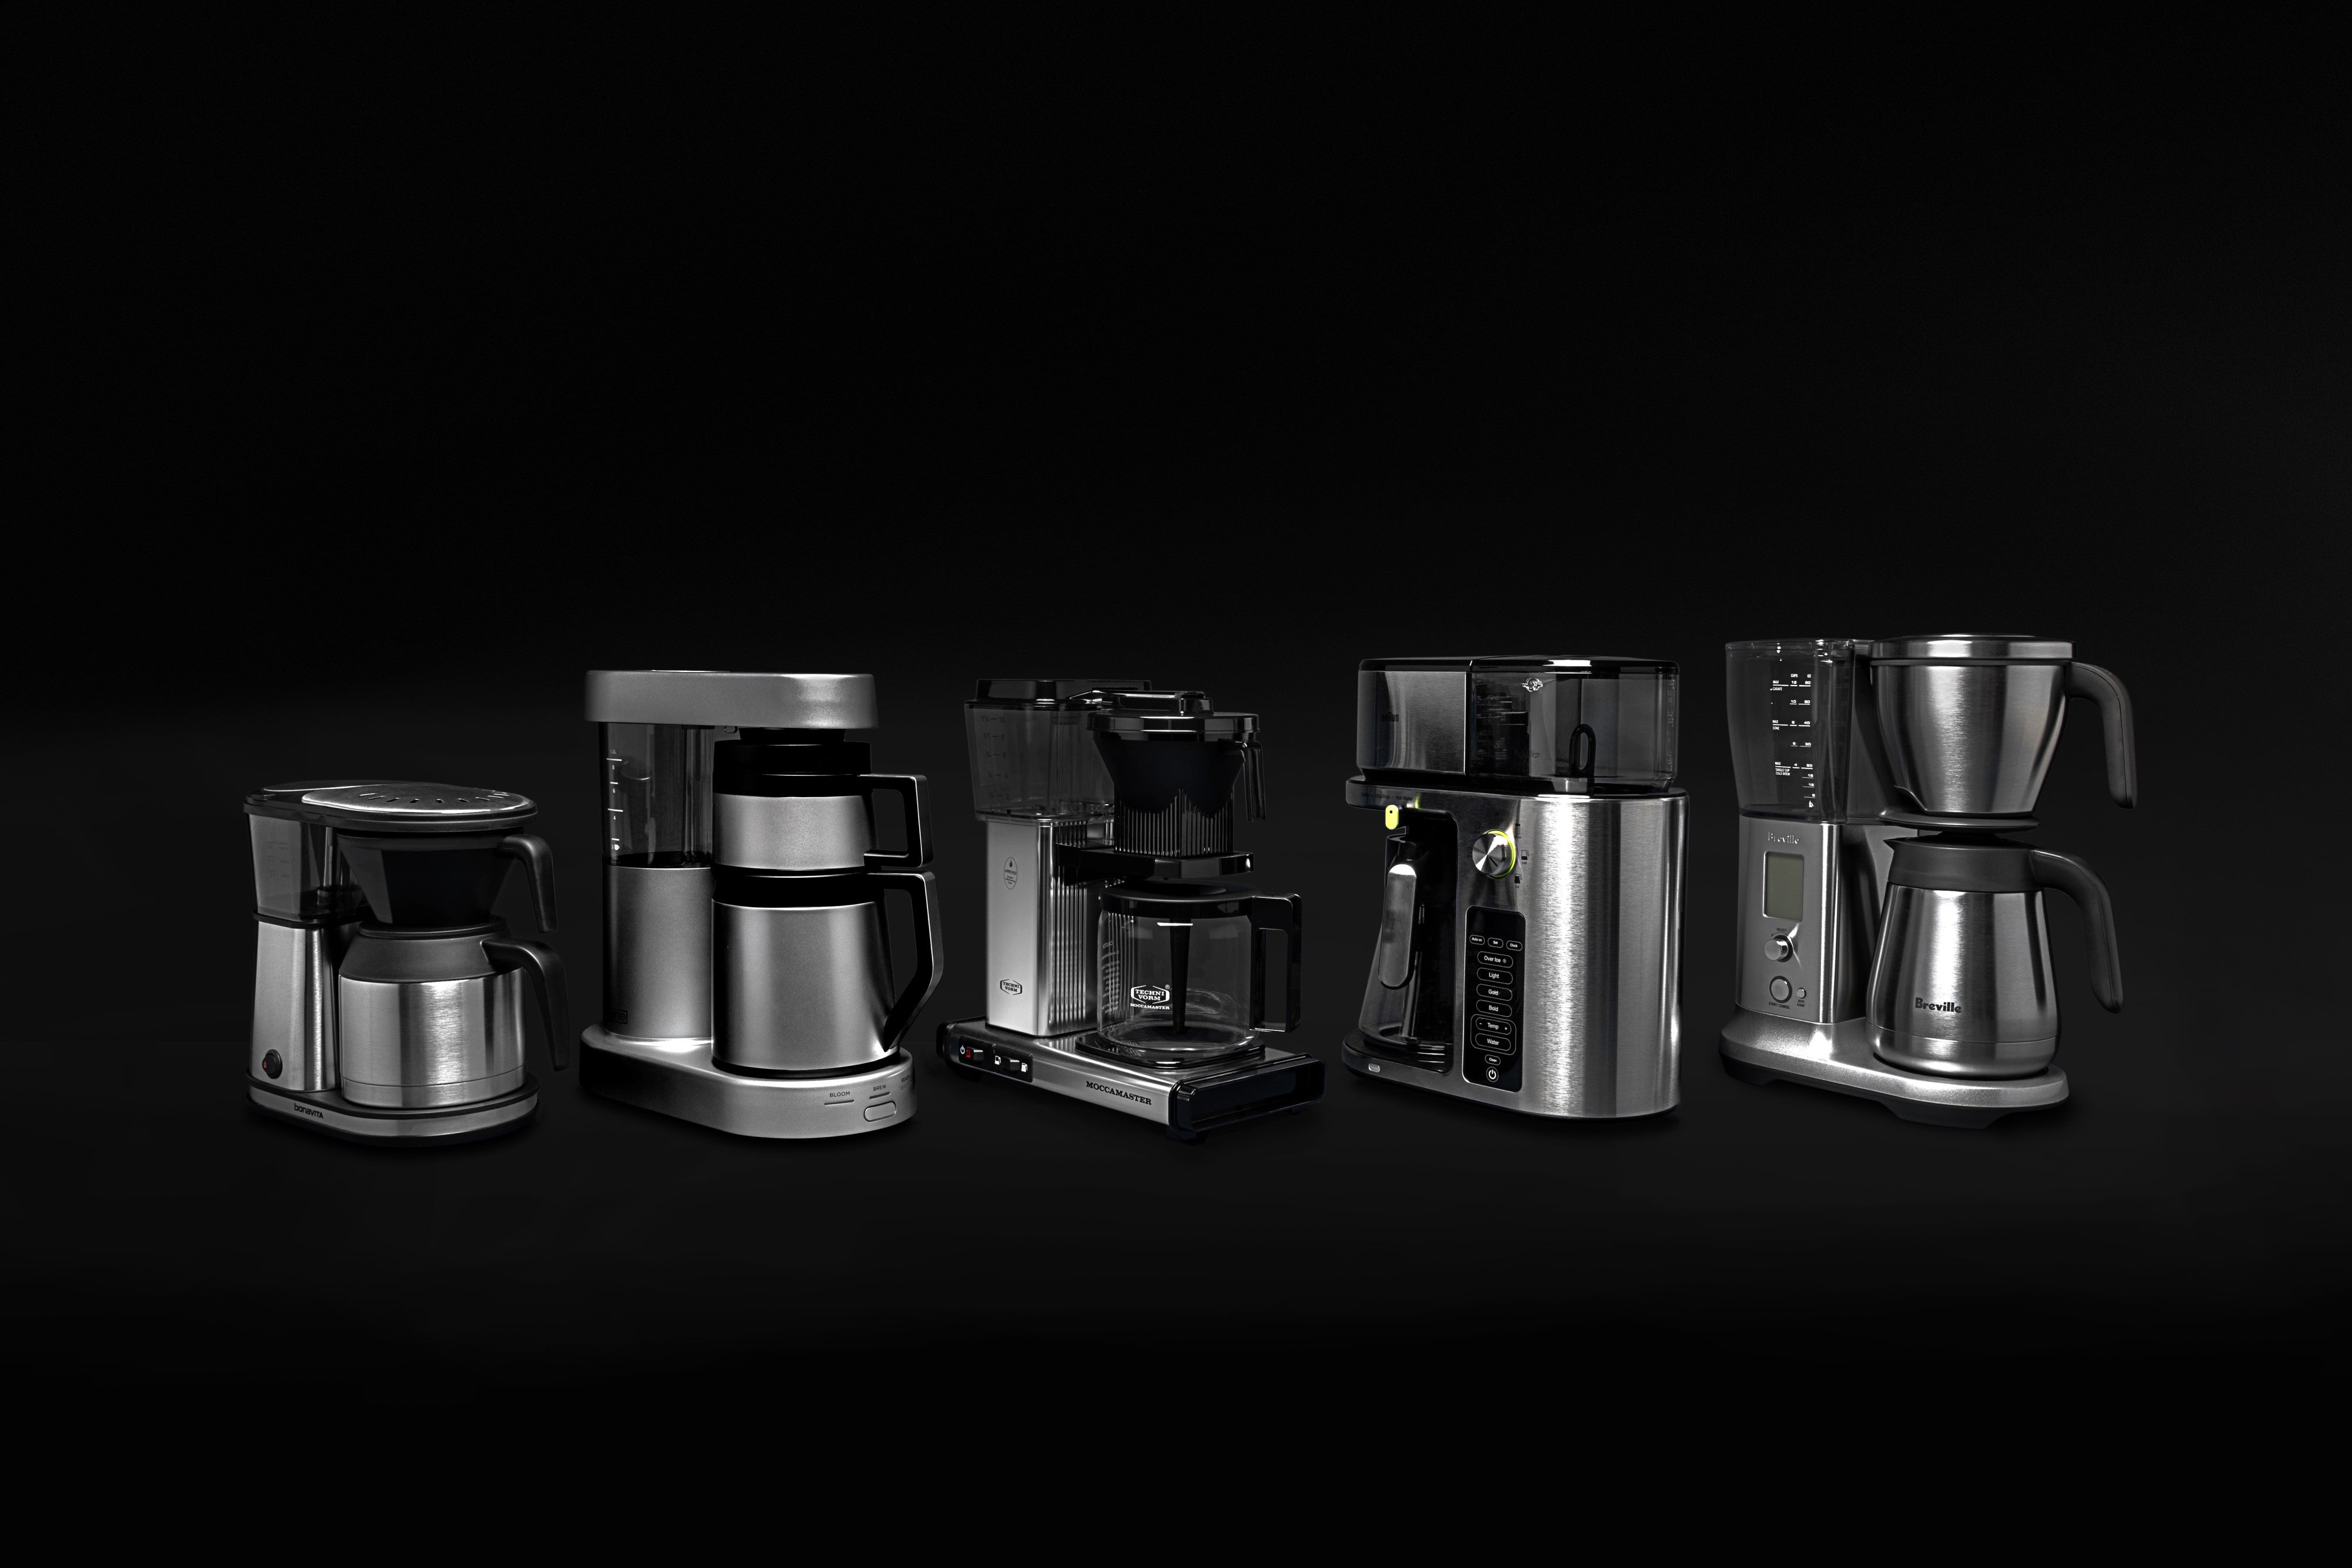 Classic Coffee Concepts 1-CUP POD COFFEE MAKER Brews POD Coffee, Auto shut- off